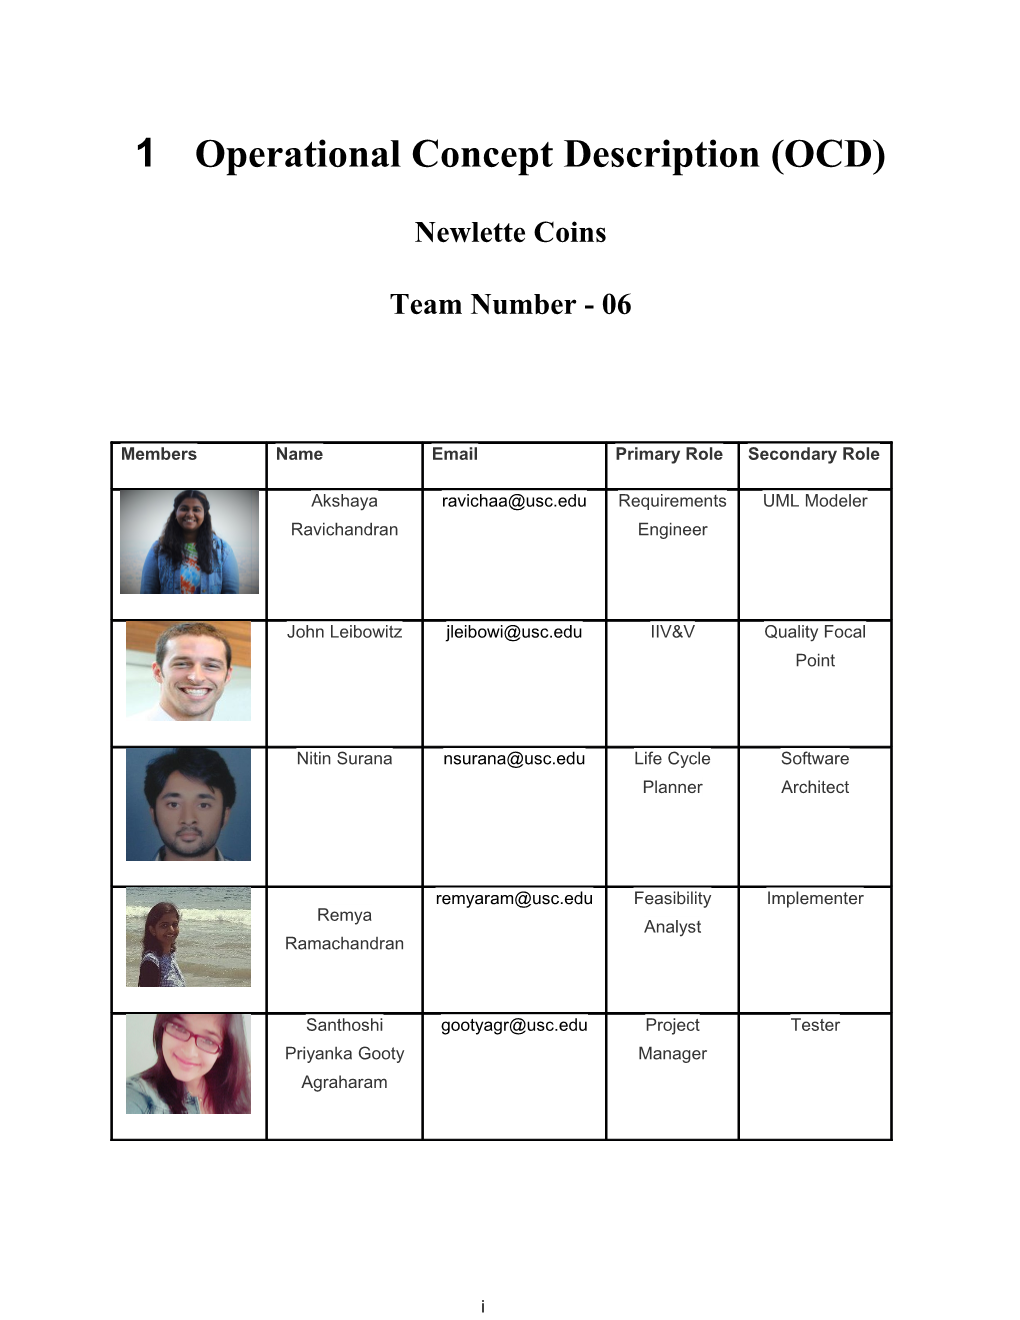 Operational Concept Description (OCD) Version 1.1